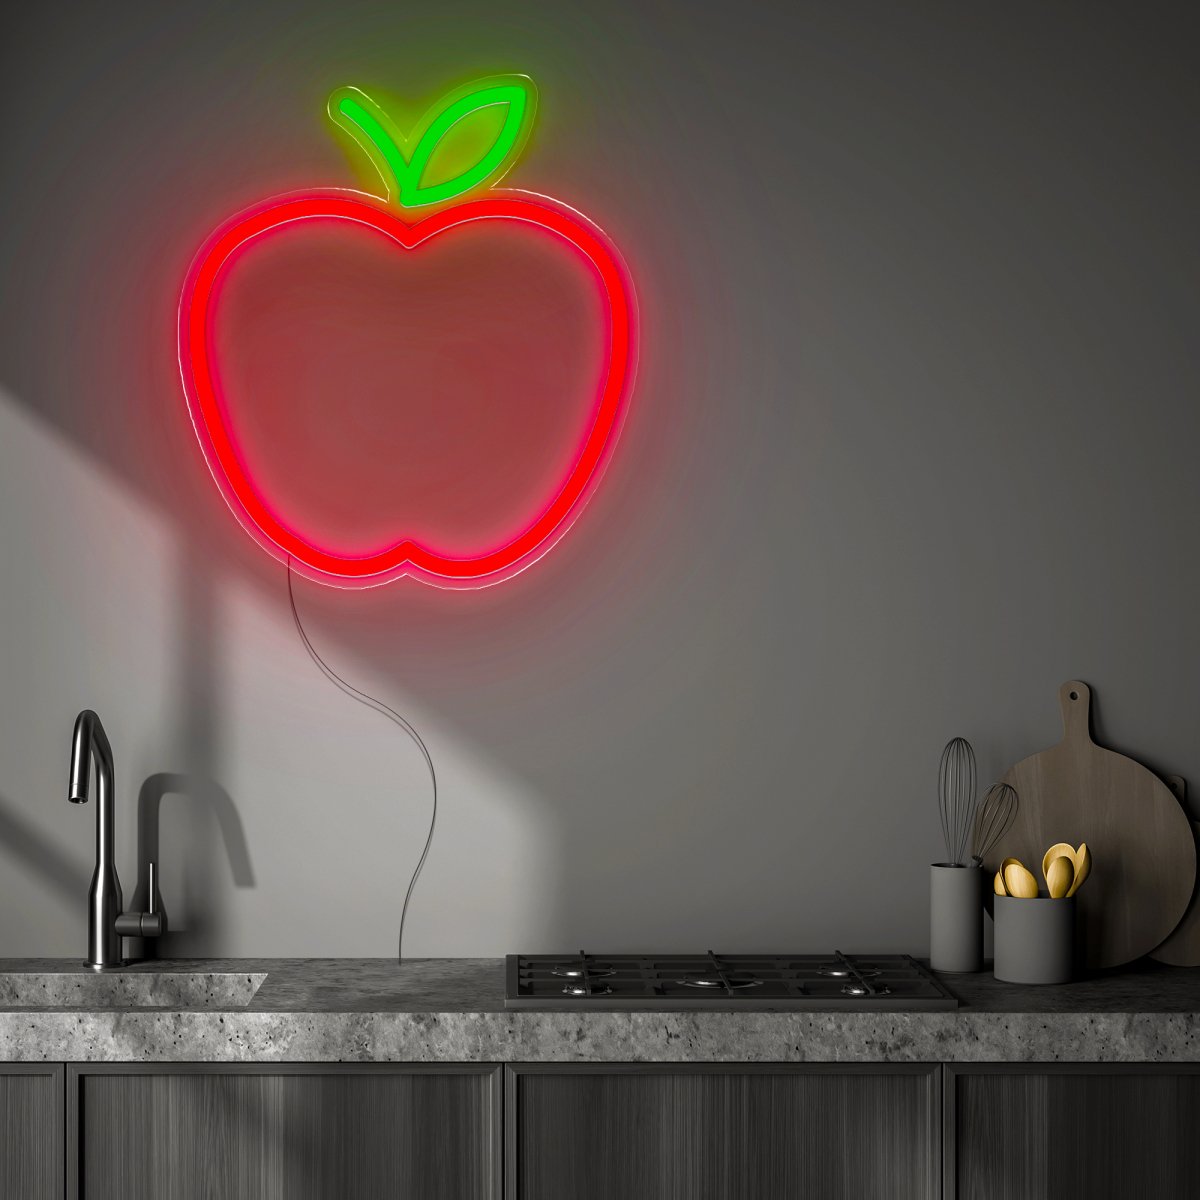 Apple Fruits Led Neon Sign - Reels Custom